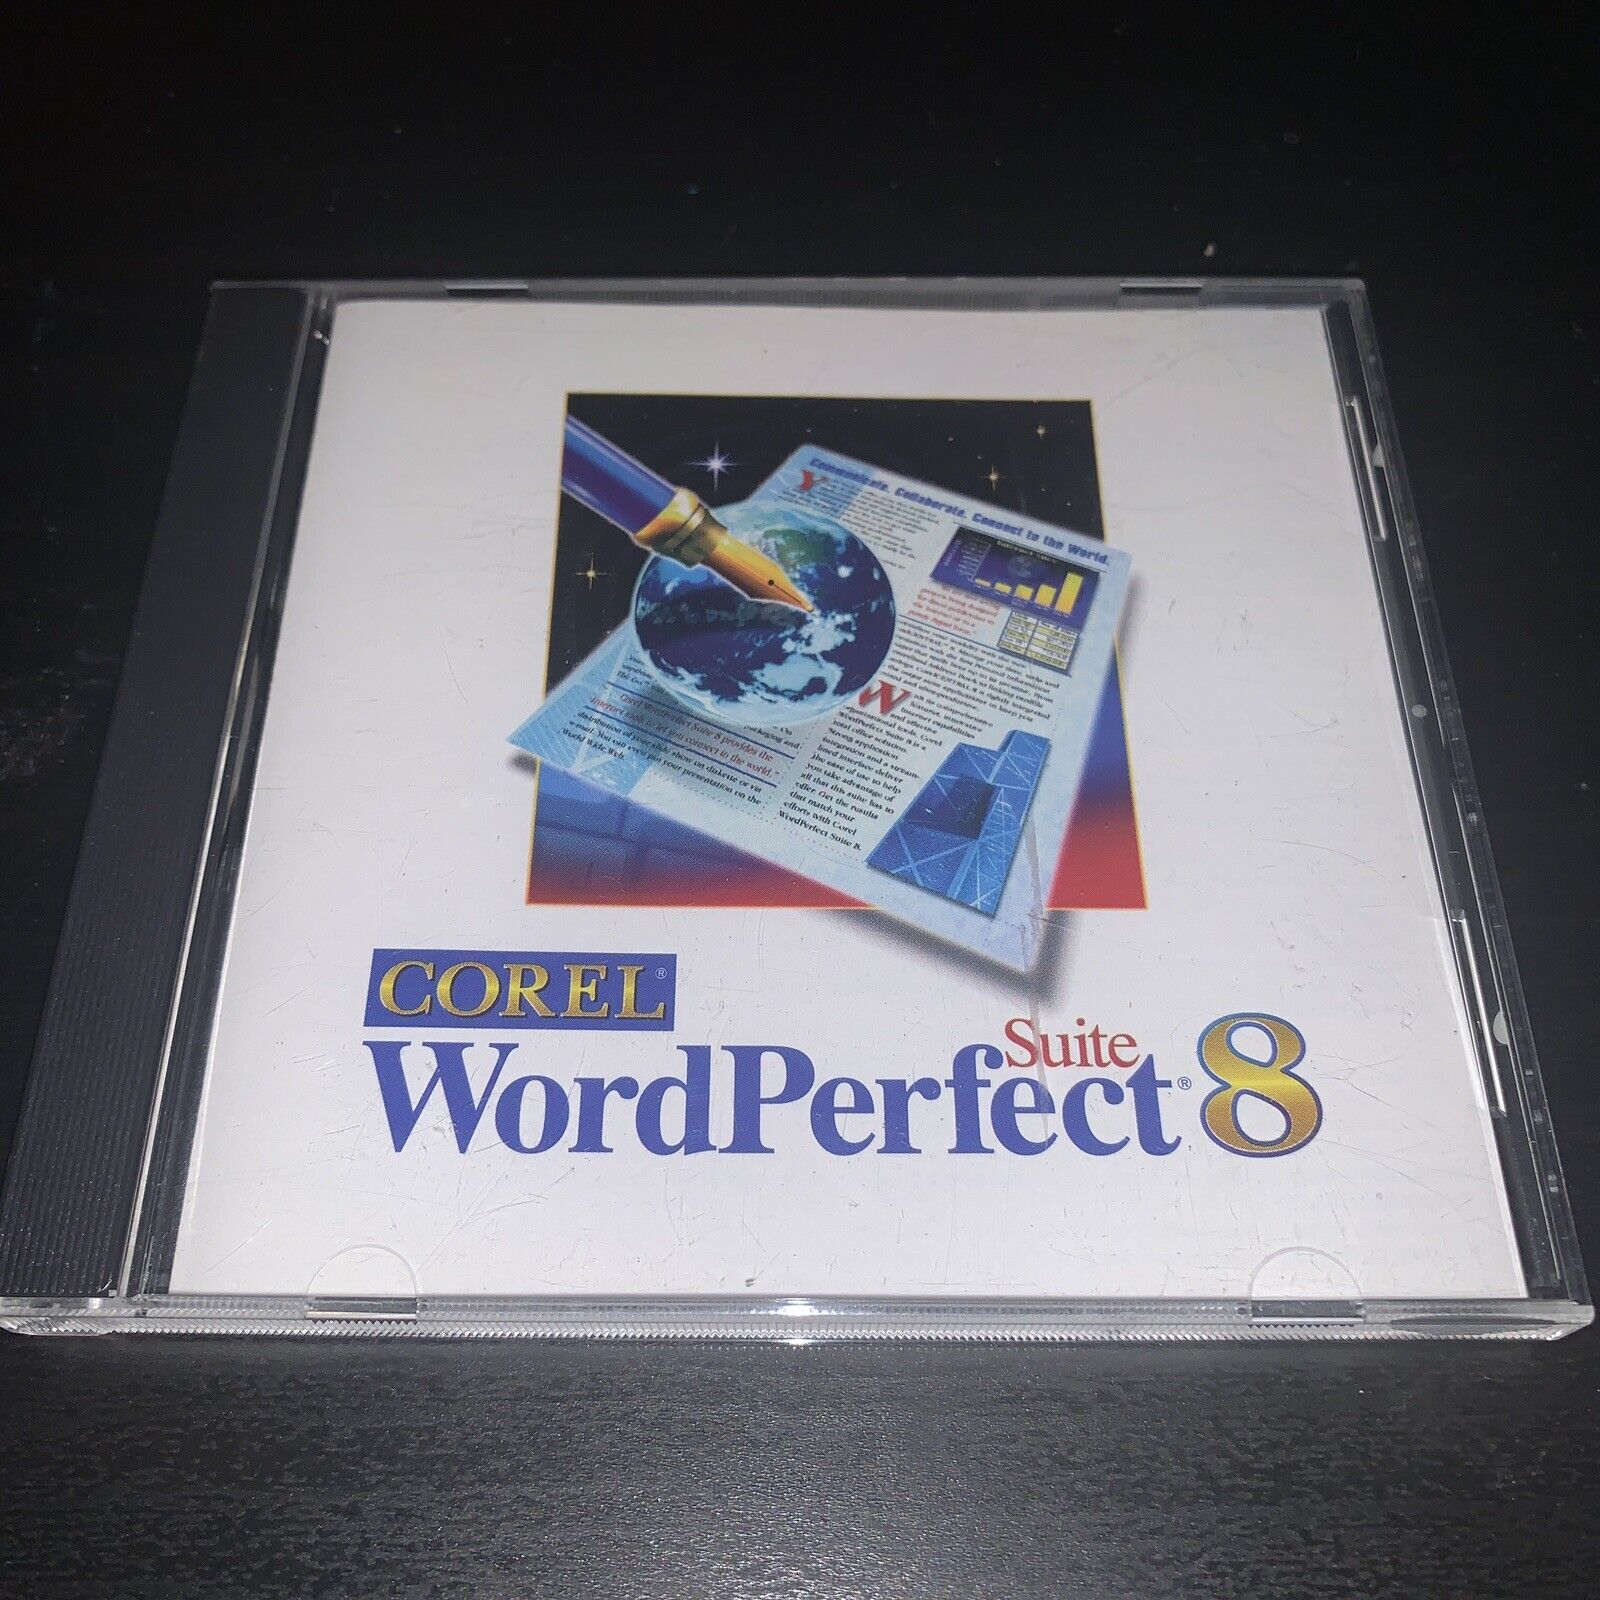 Corel Wordperfect Suite 8 - Complete Windows Software on CD 1997 Vintage